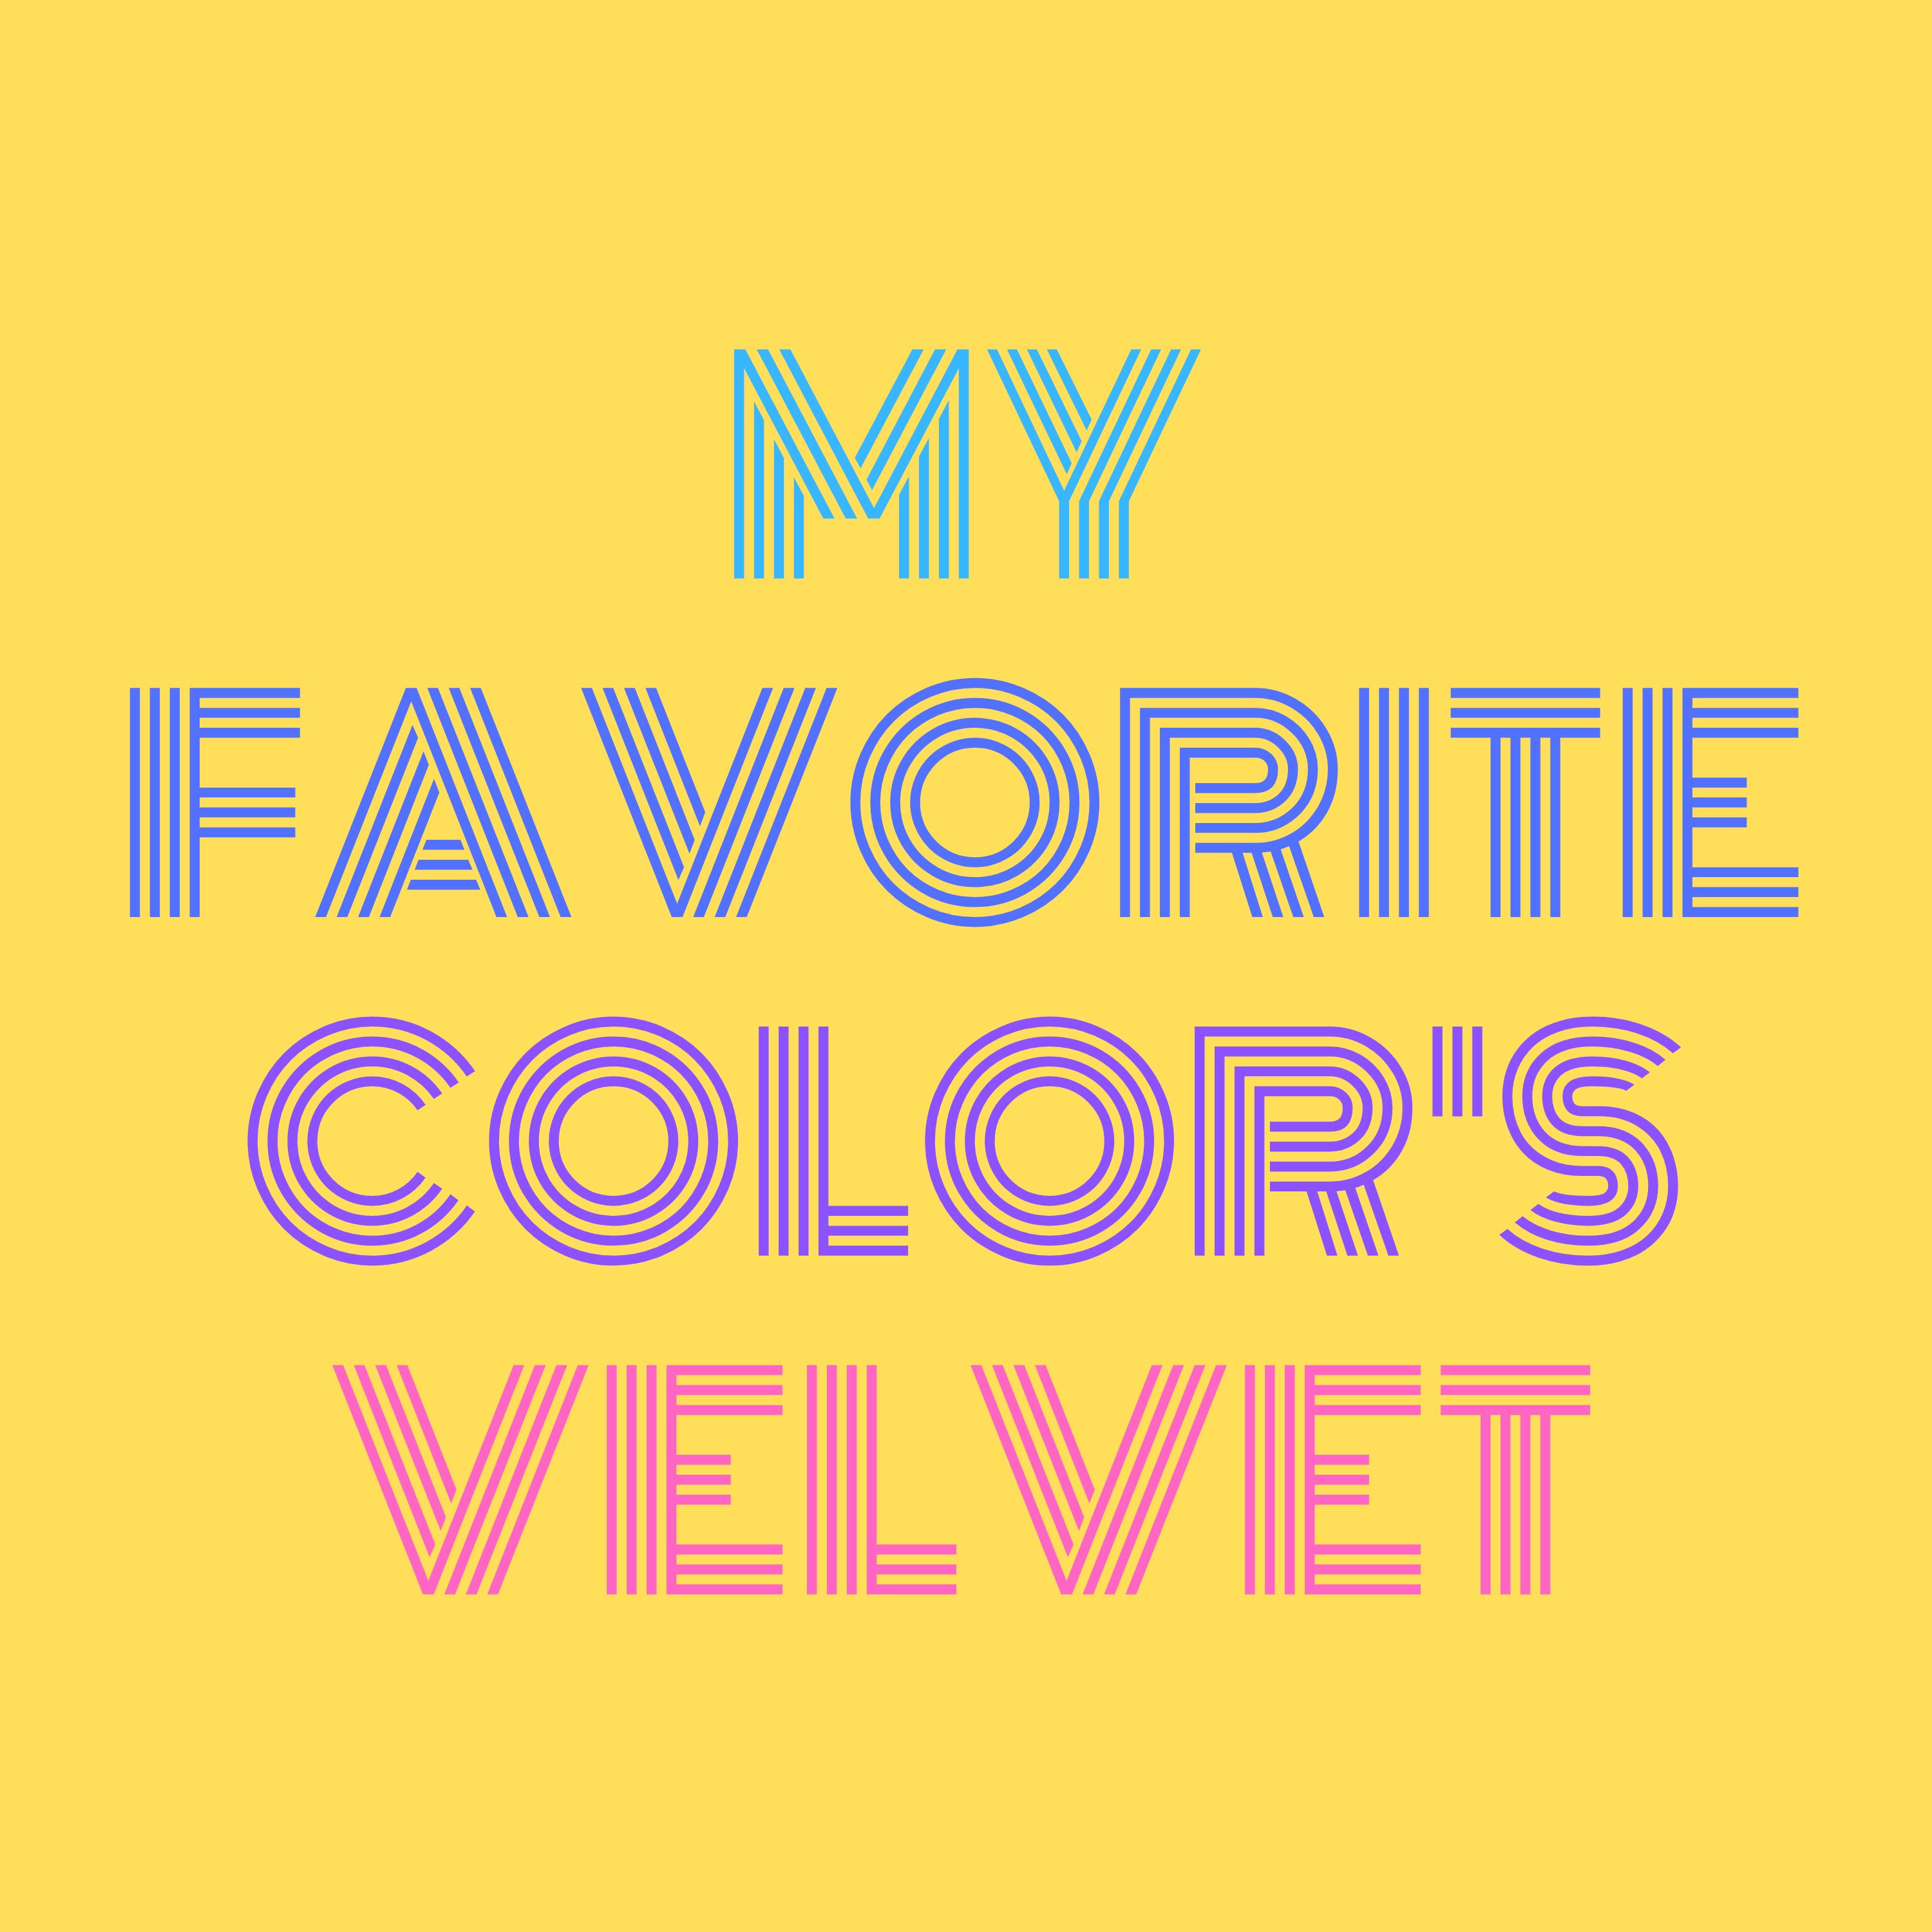 My Favorite Color's Velvet